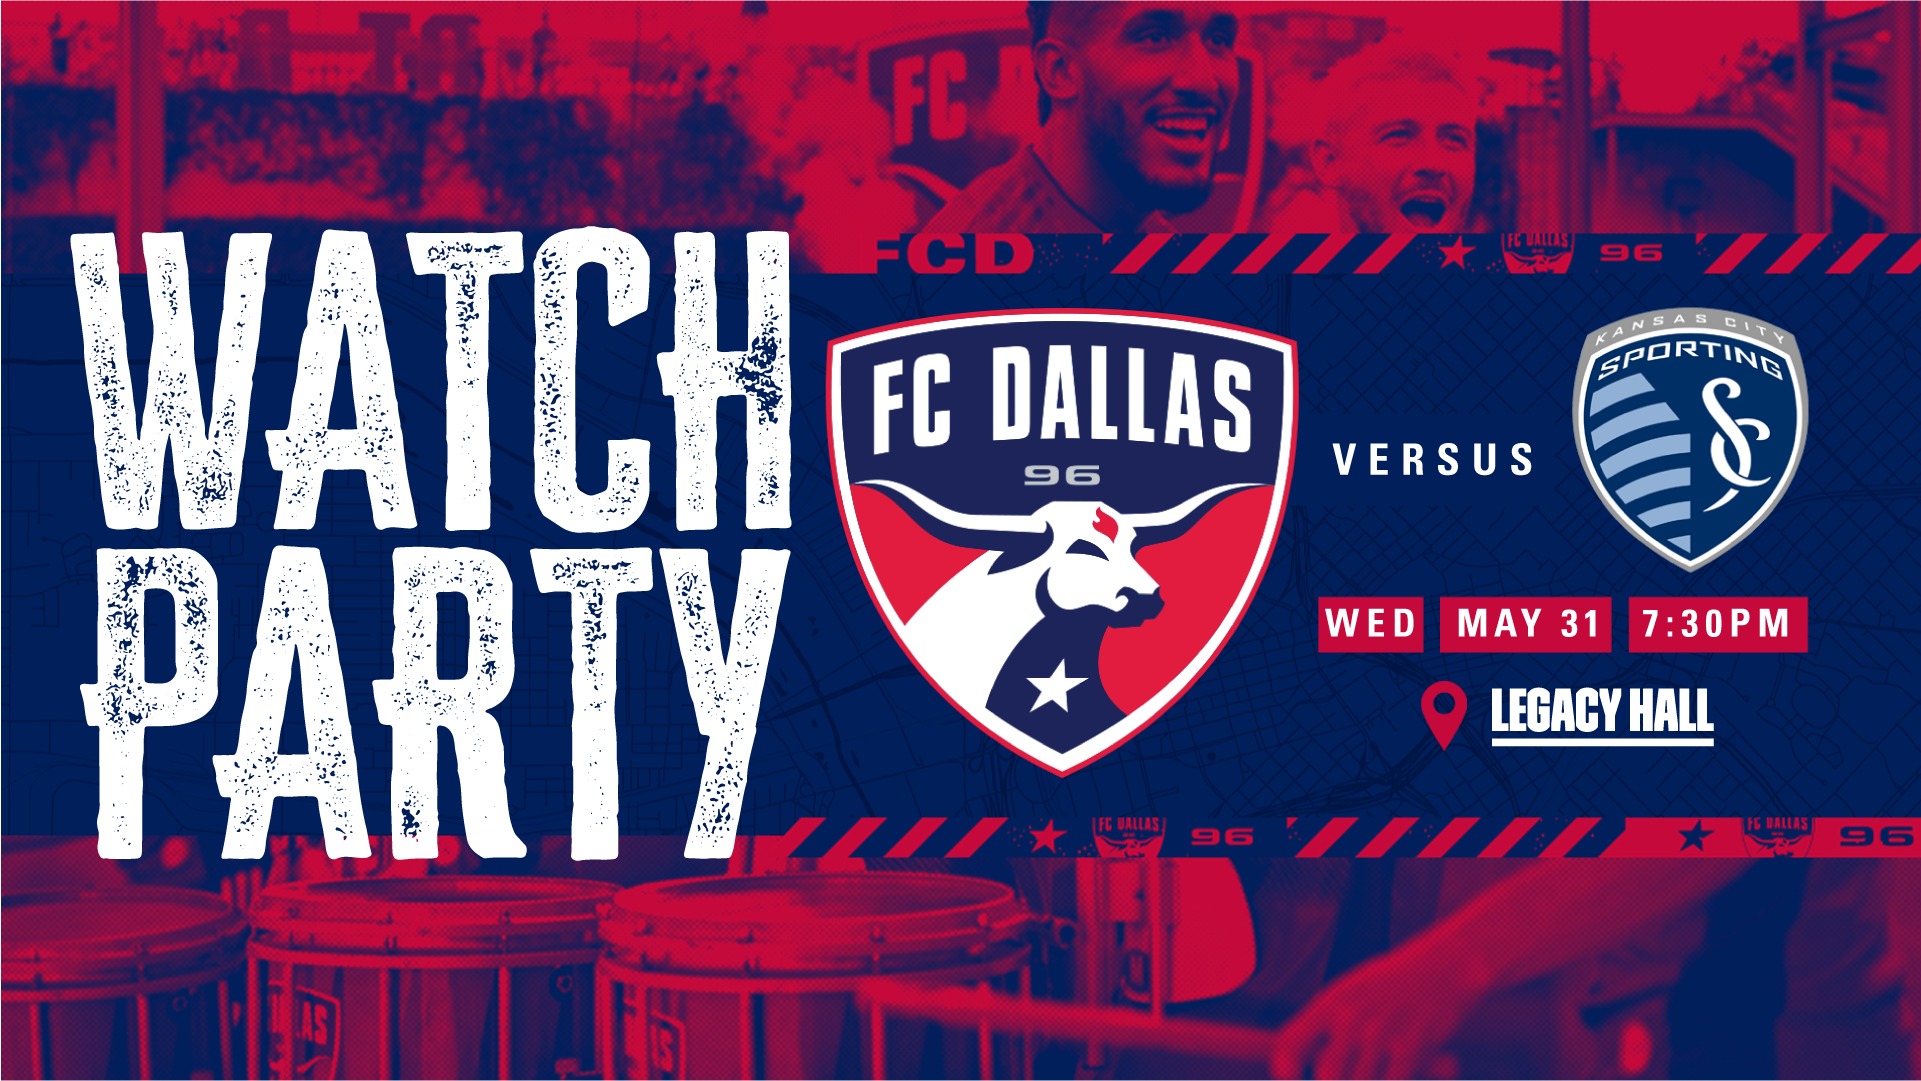 FC Dallas VS Sporting KC Watch Party